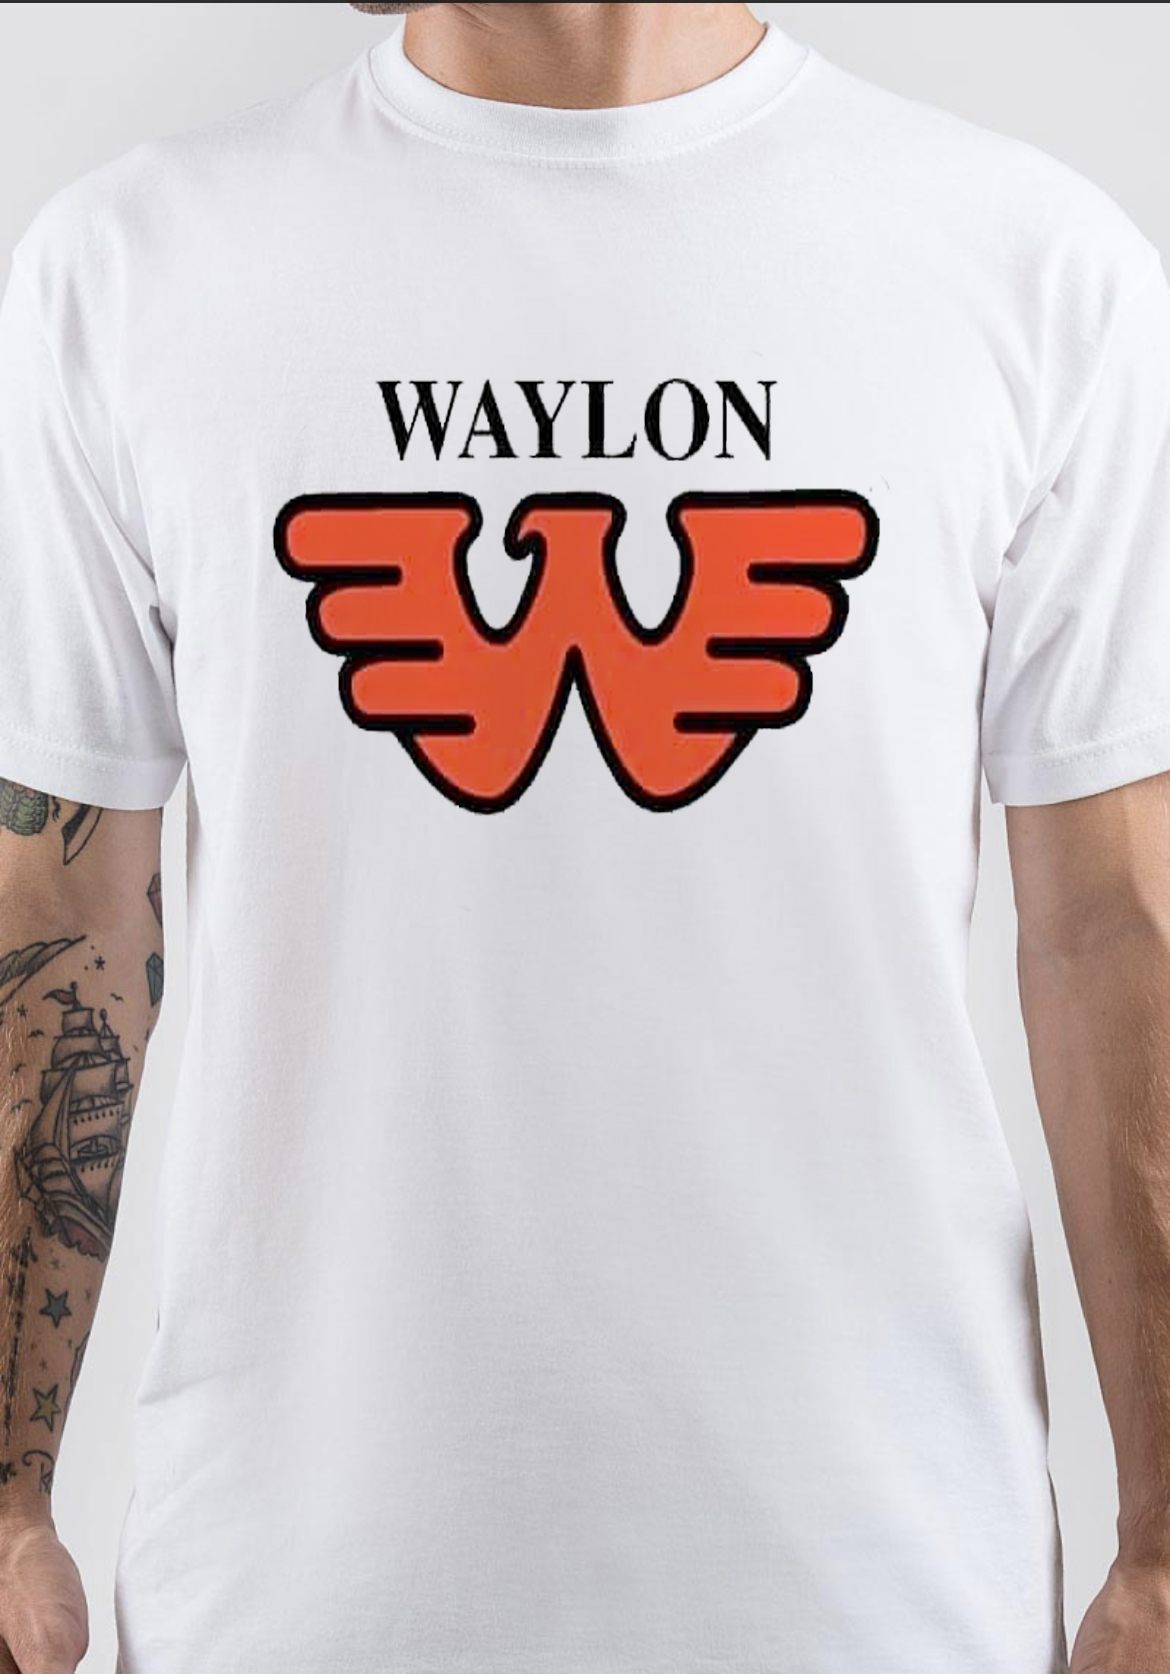 Waylon Jennings - Forever Flyin' ⚡️ Waylon Jennings Flying W tattoo on  Andrew Moehling by artist Dub in Richmond, Virginia | Facebook